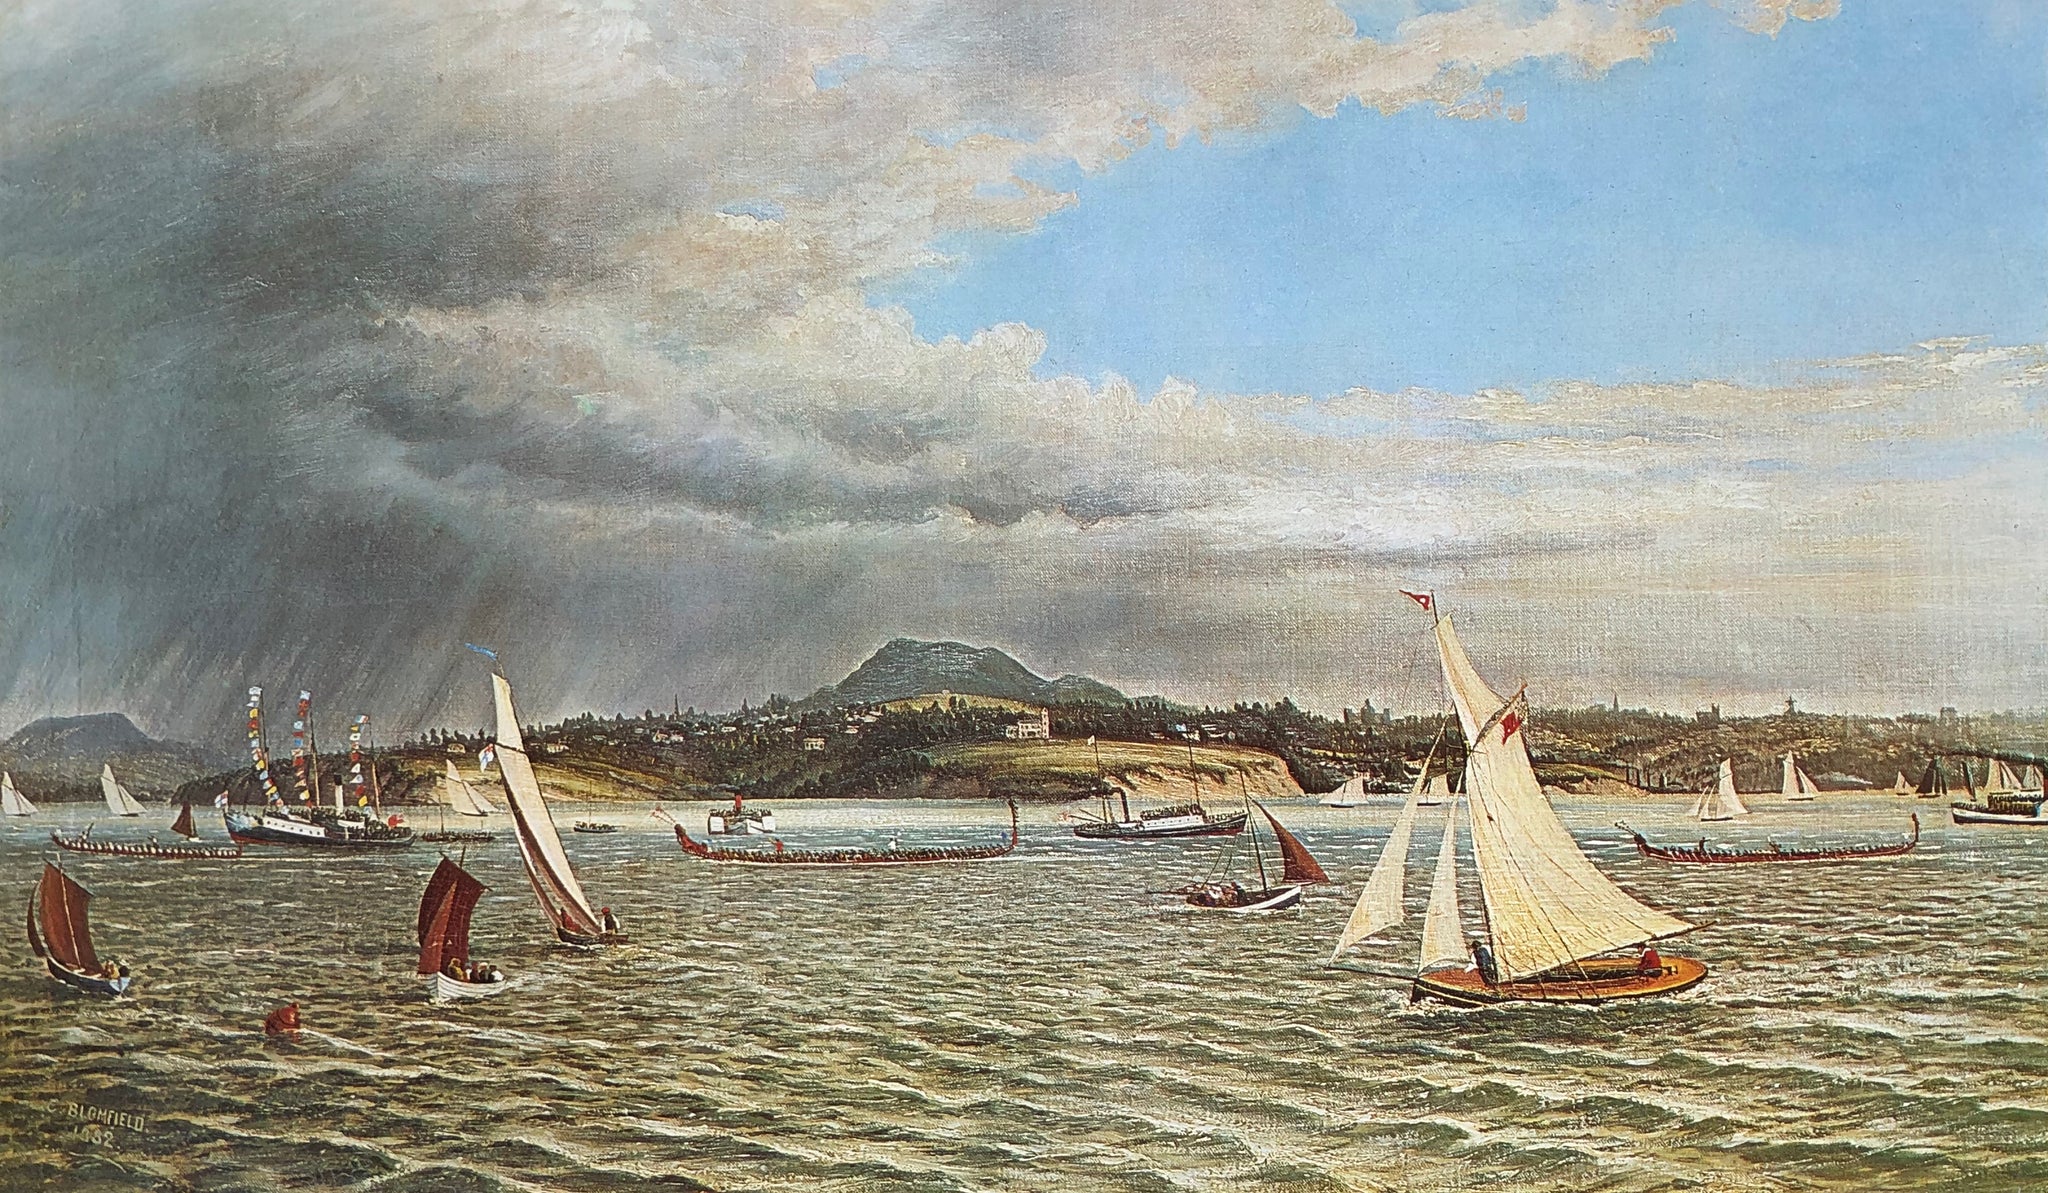 "Maori Canoe Race, Auckland Regatta 1882" - Charles Blomfield